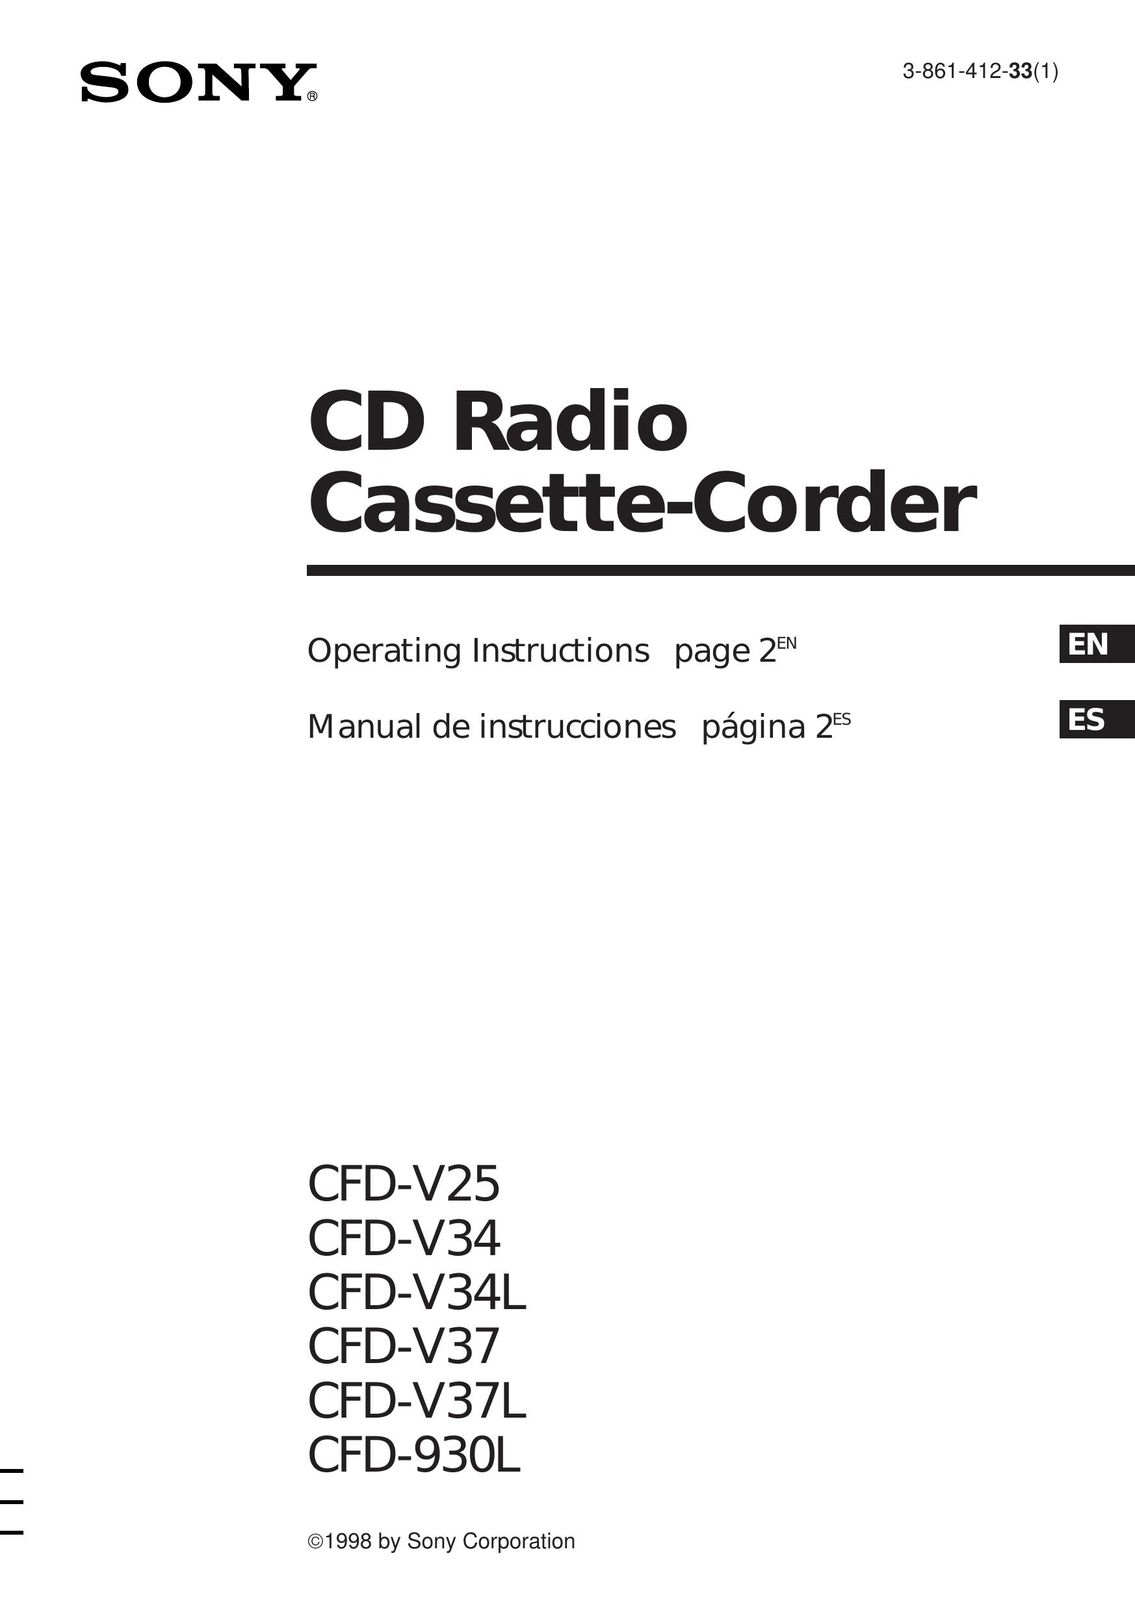 Sony CFD-V37L Cassette Player User Manual